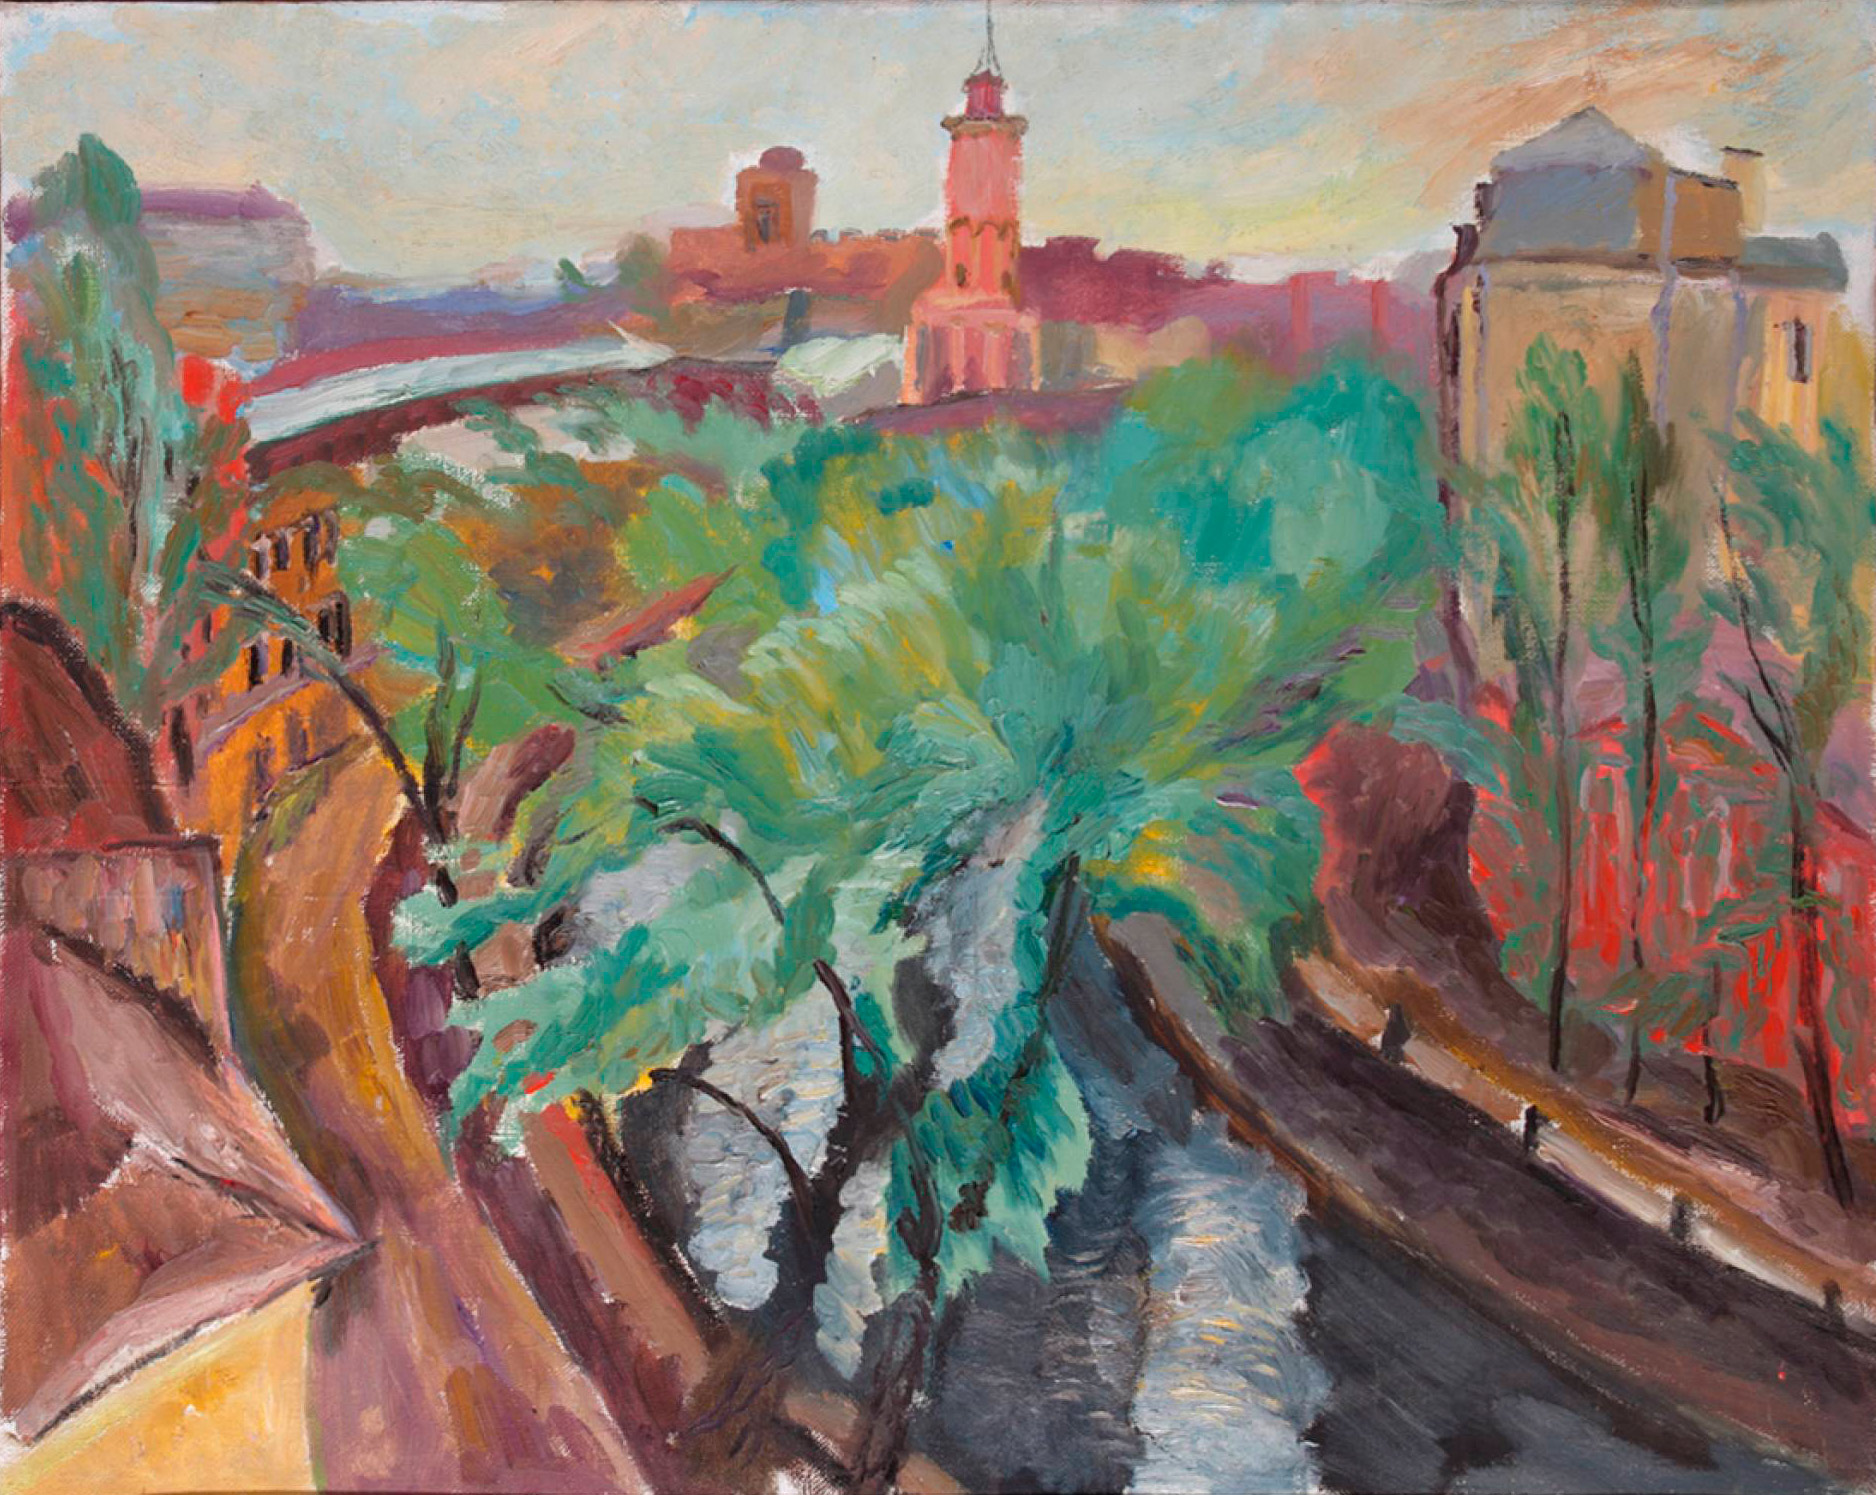 Catherine canal, Kirill Leshchinsky, Buy the painting Oil